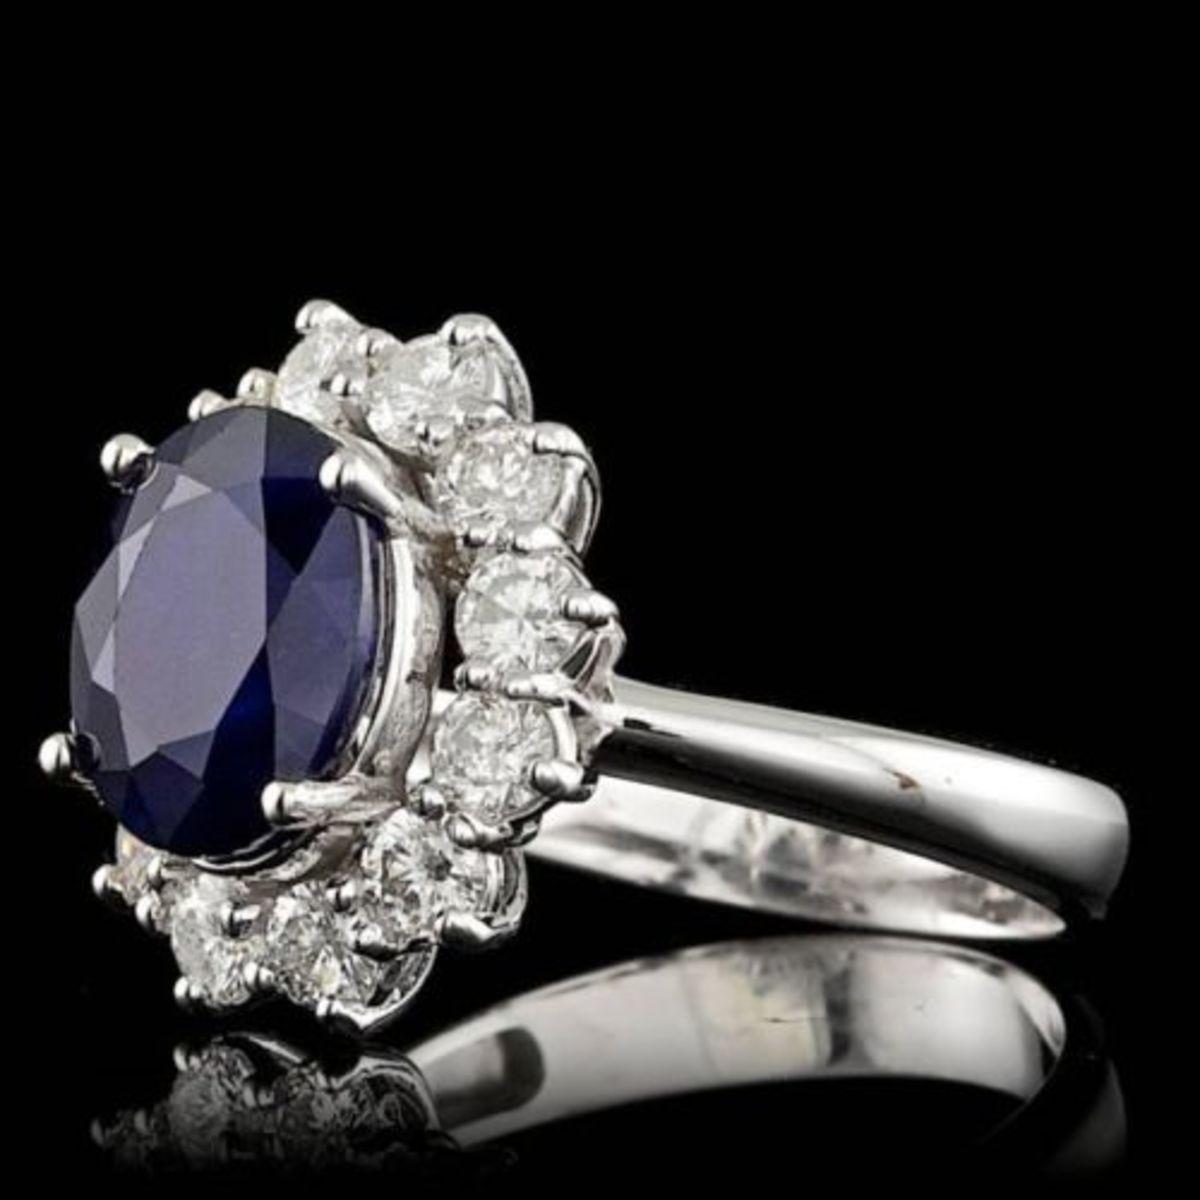 14K White Gold 3.79ct Sapphire and 1.13ct Diamond Ring